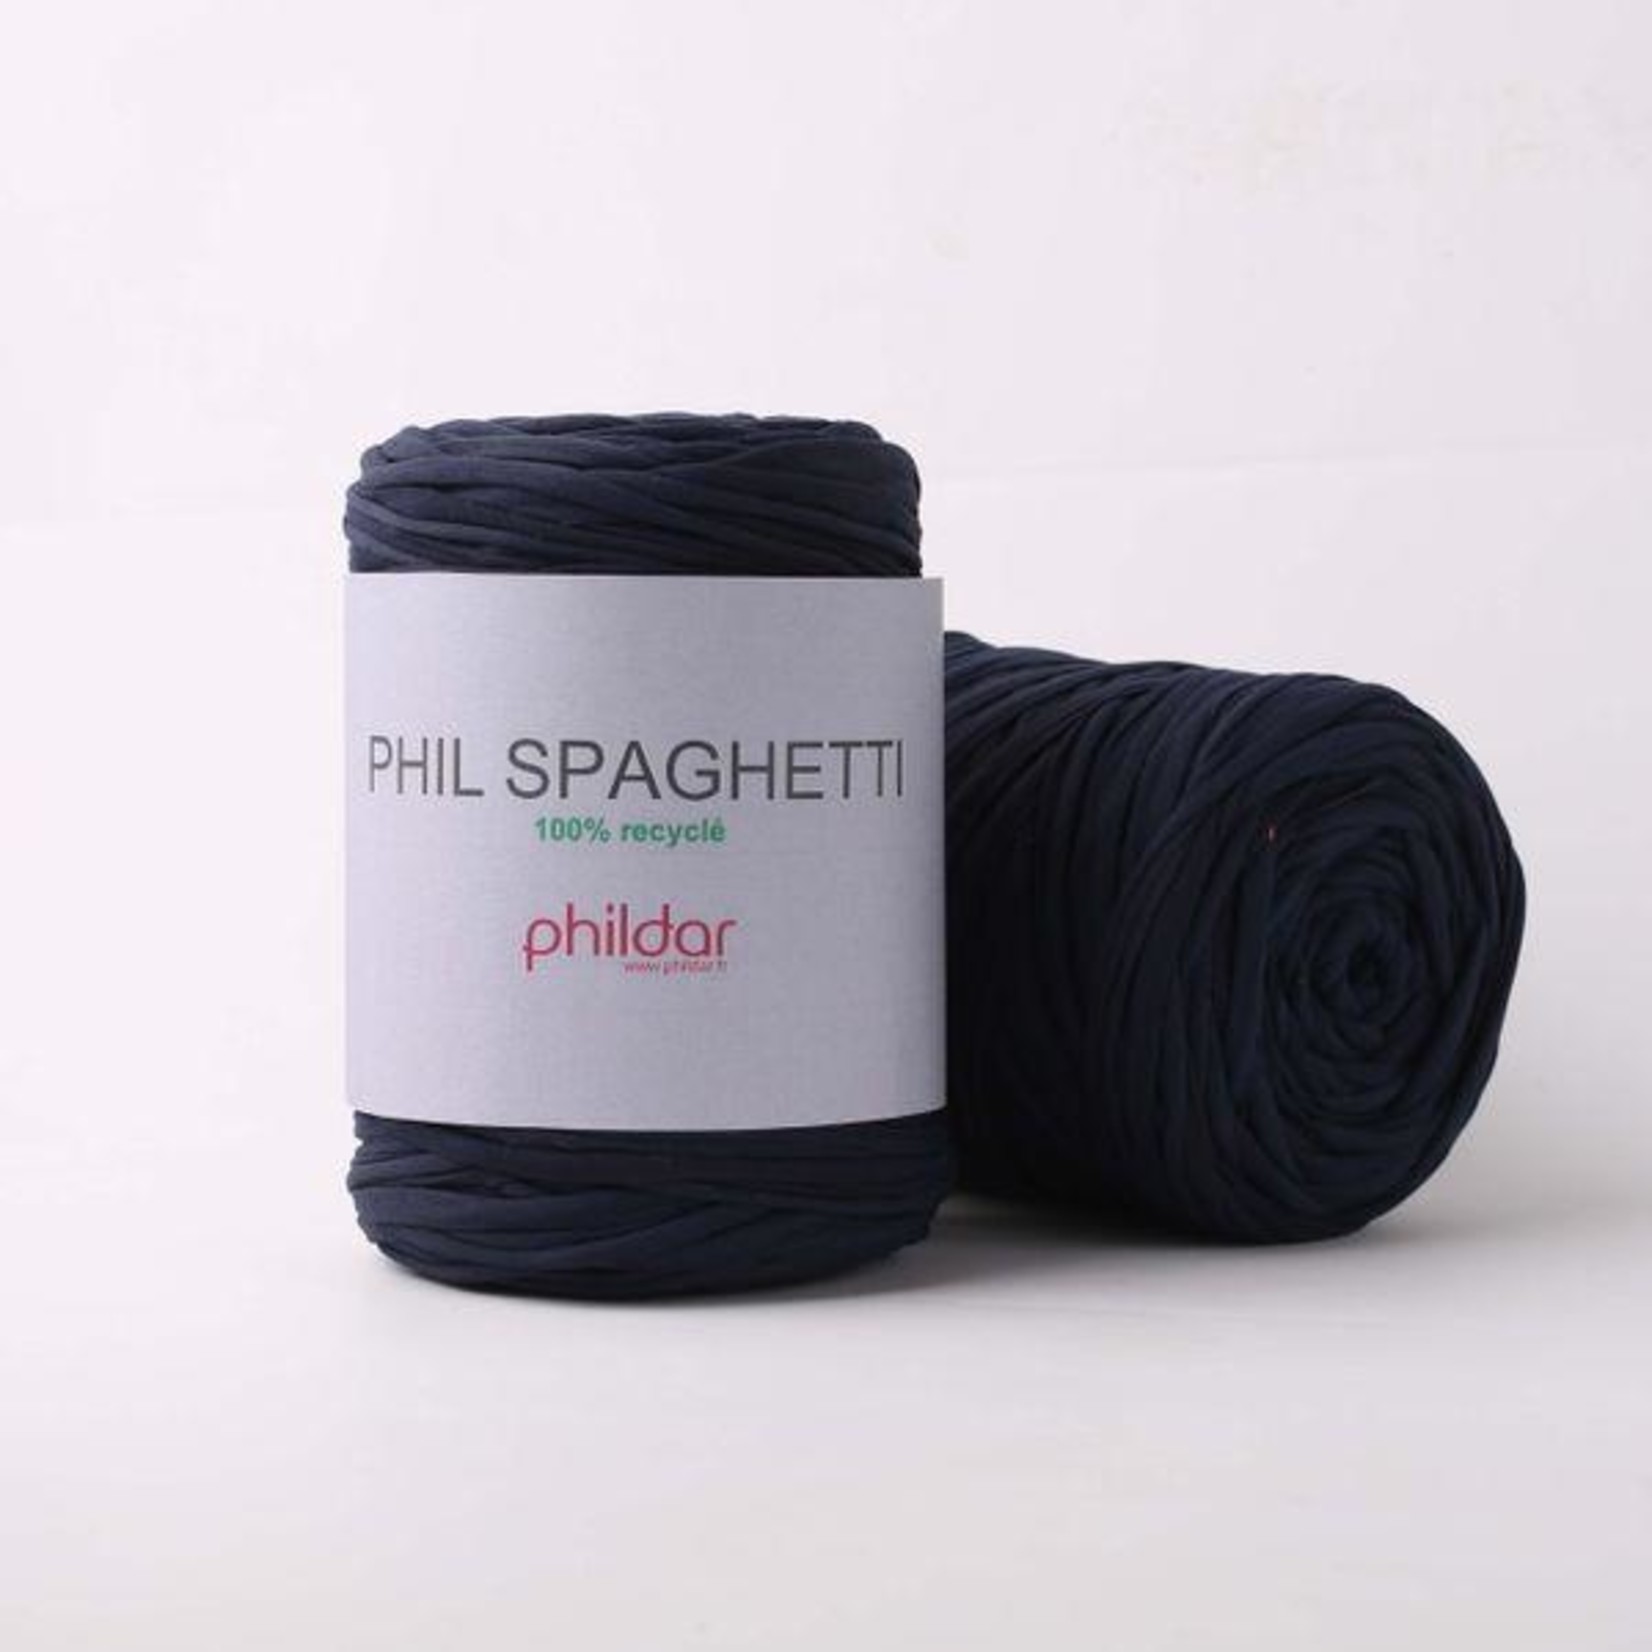 Phildar Phil Spaghetti by Phildar